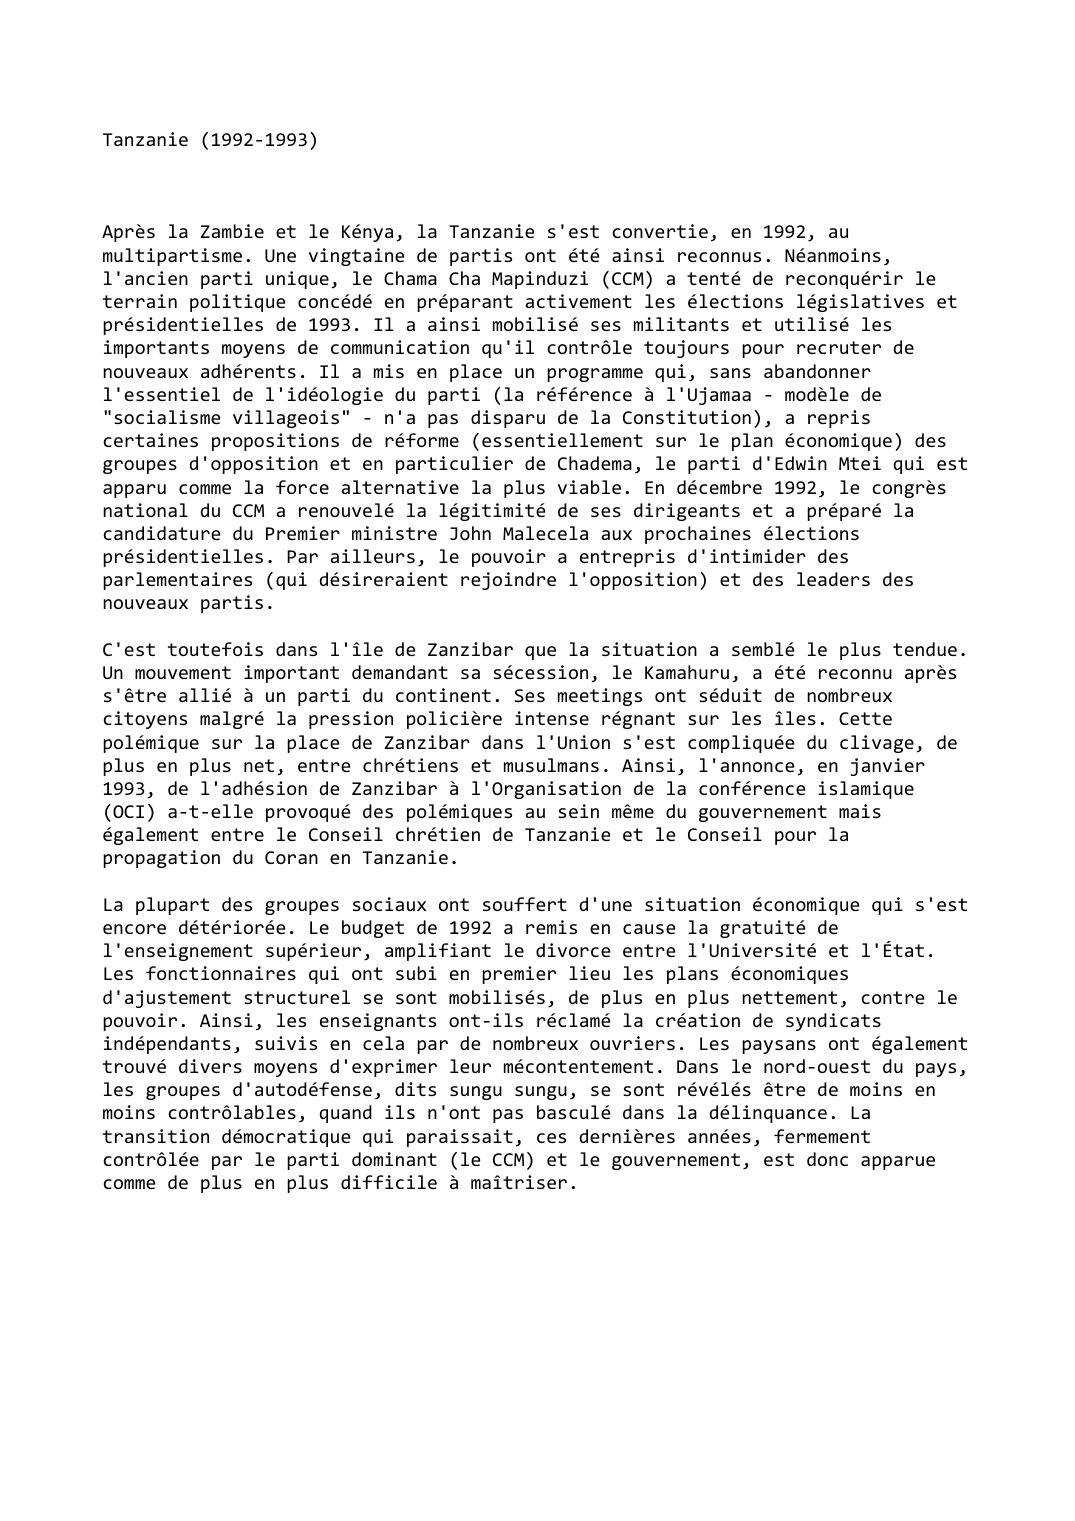 Prévisualisation du document Tanzanie (1992-1993)